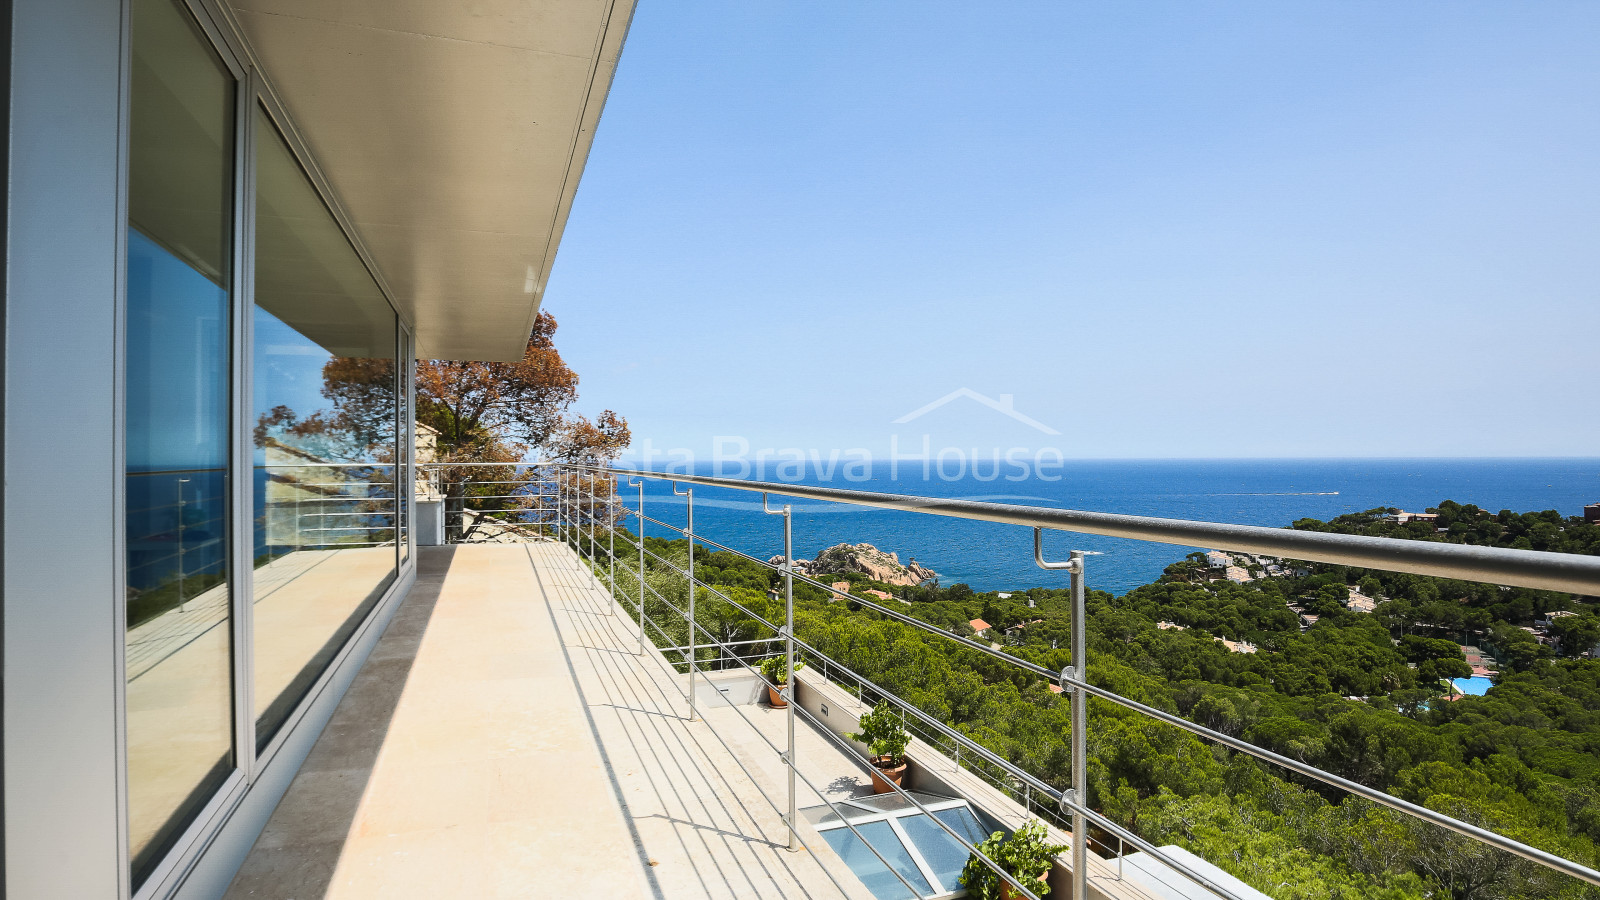 Modern luxury villa with sea views and pool for sale in Tamariu